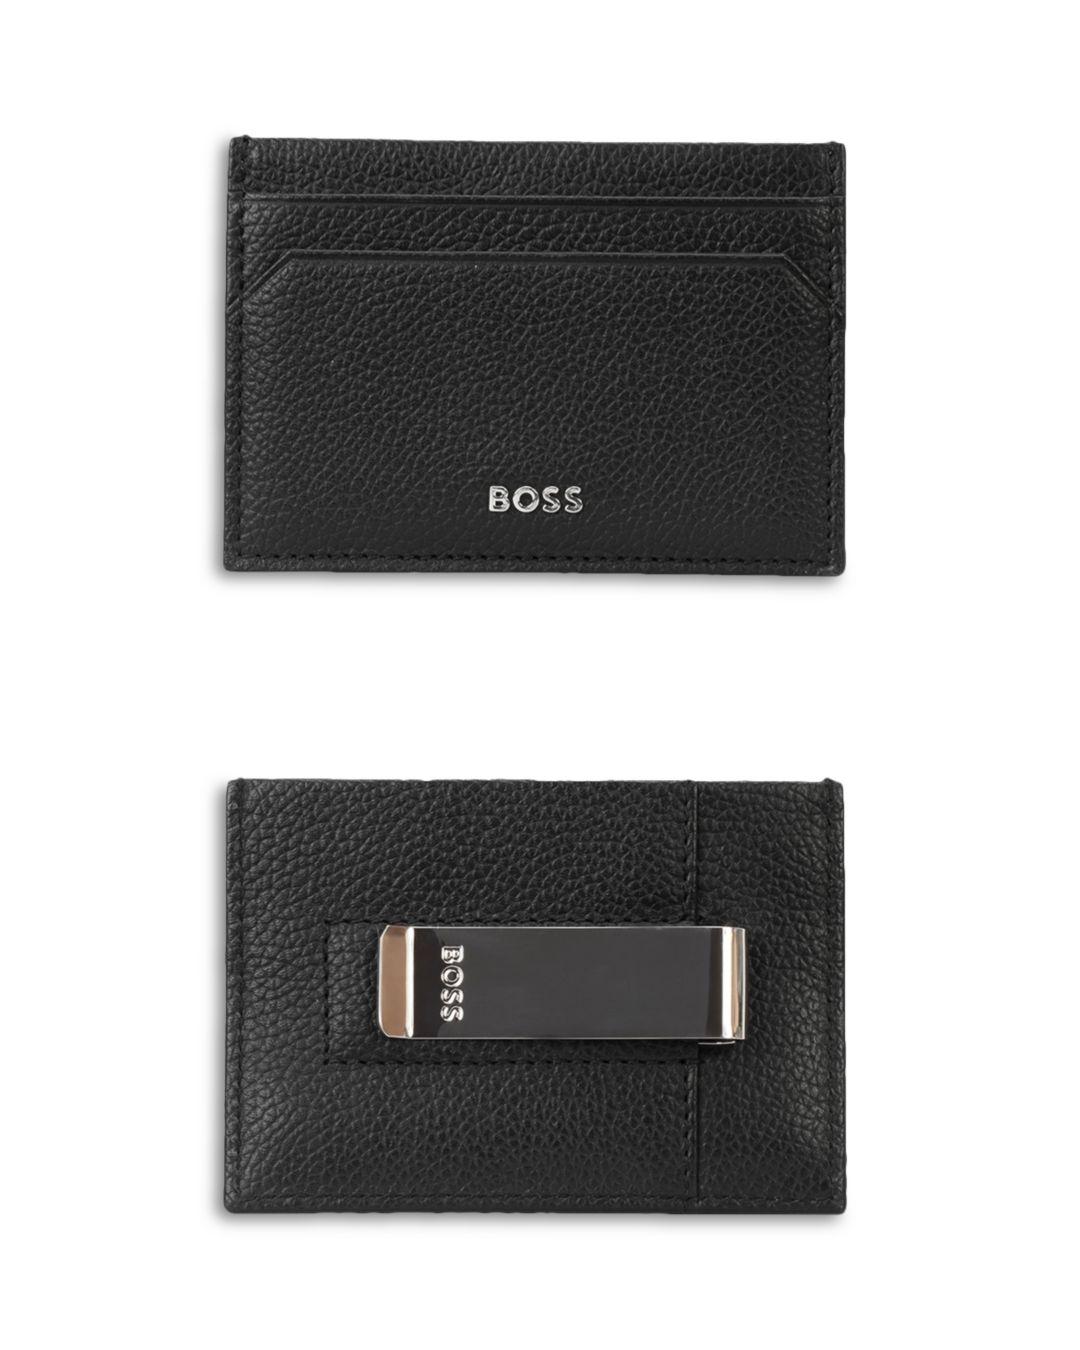 BOSS by HUGO BOSS Highway Leather Money Clip in Black for Men | Lyst